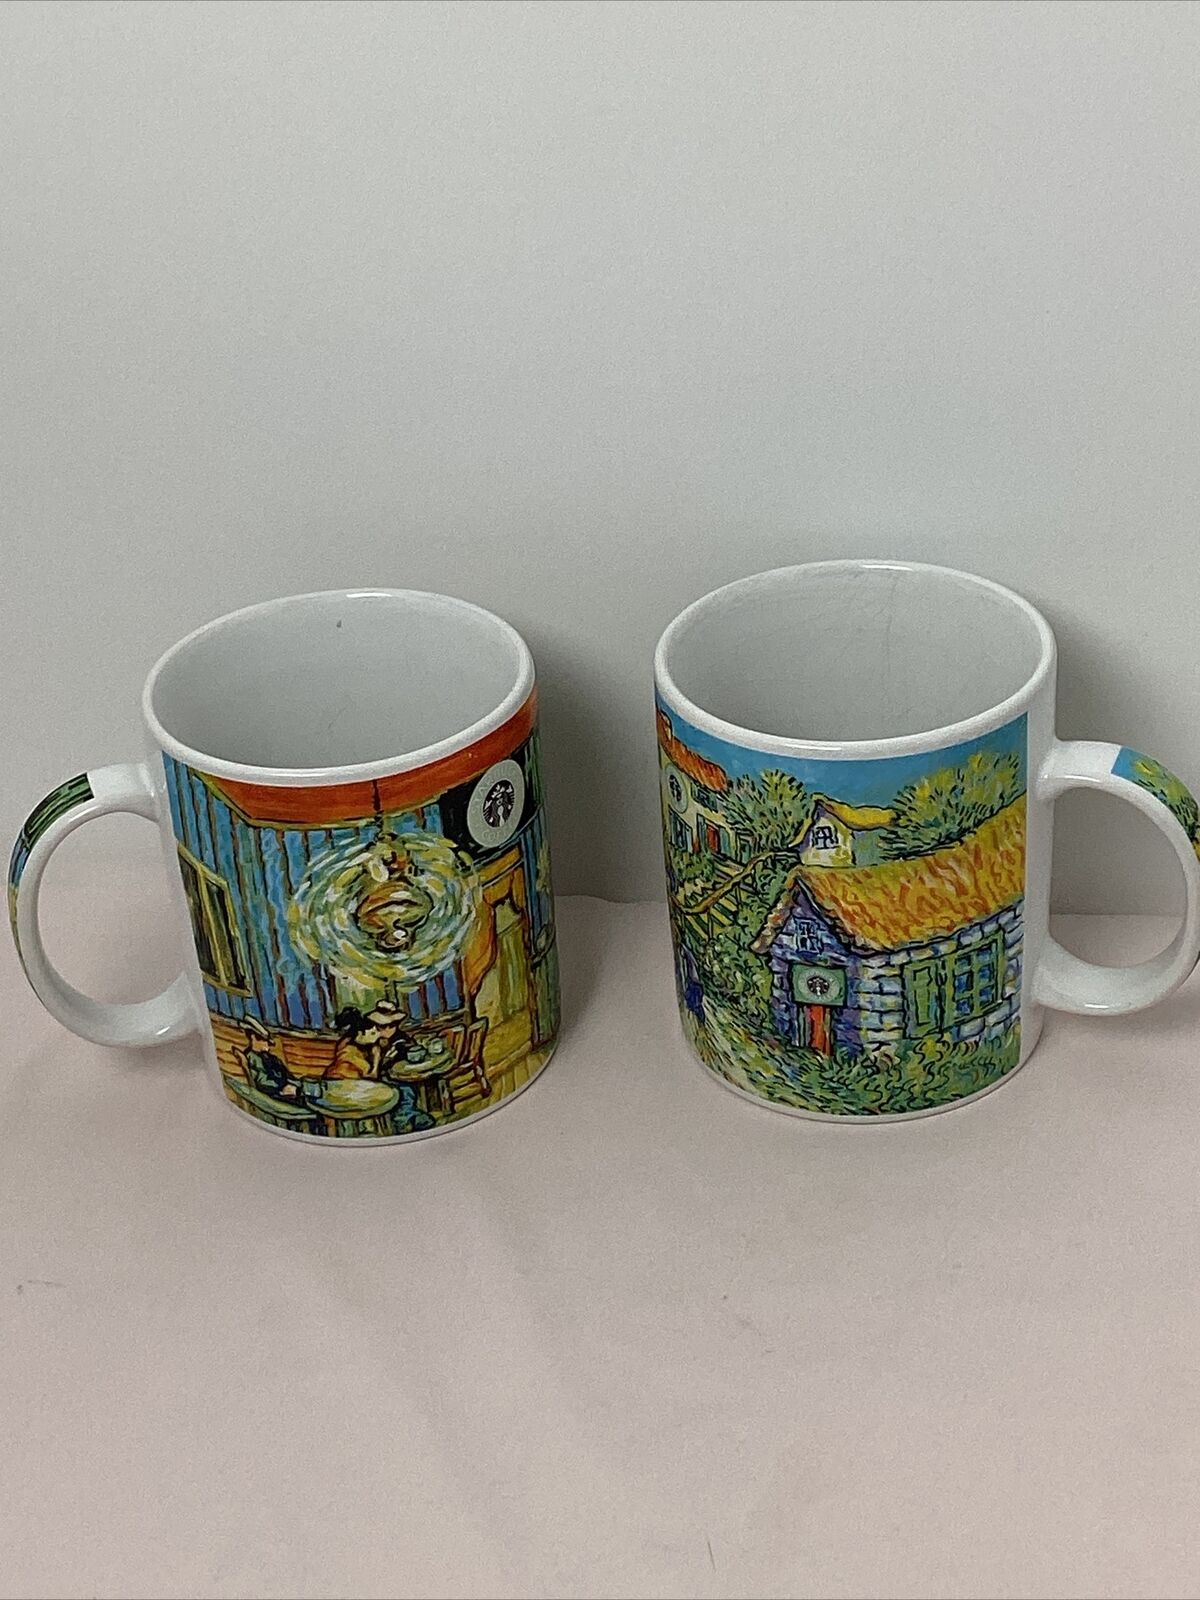 2 Starbucks Barista Van Gogh Style Coffee Mugs 2001 Colorful Painting